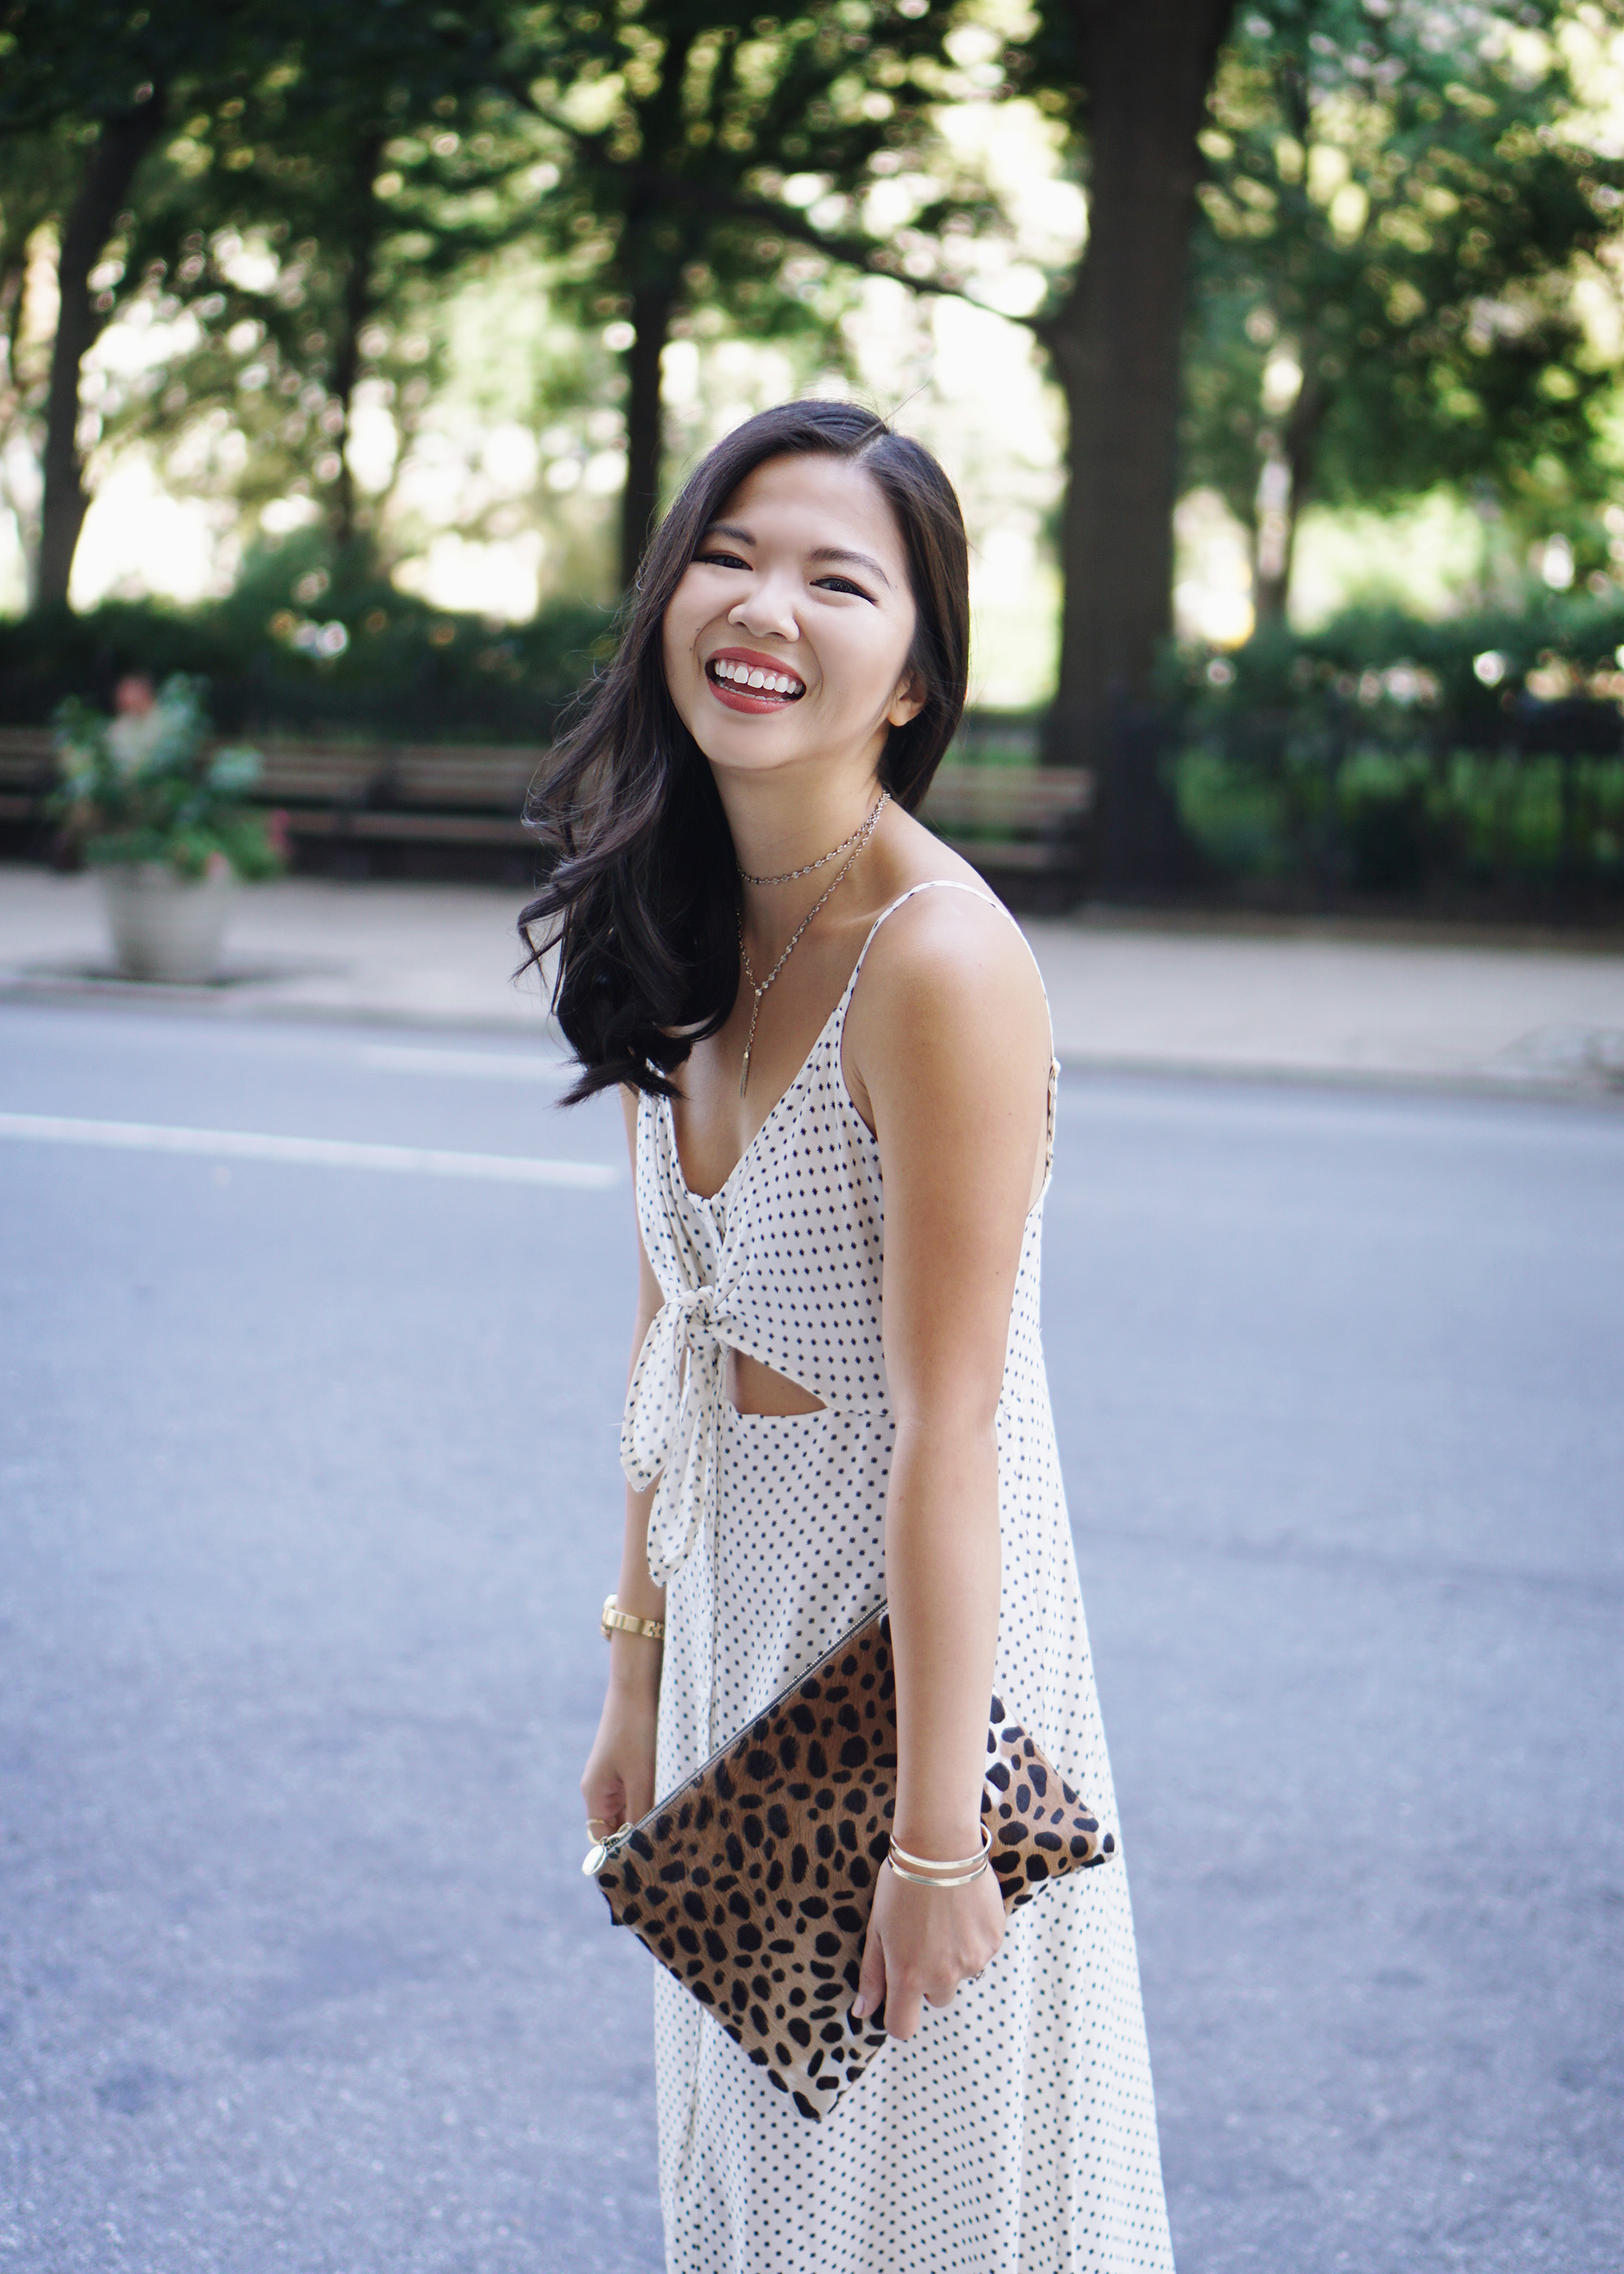 Summer Style Inspiration: Black & White Print Tie Front Slip Dress